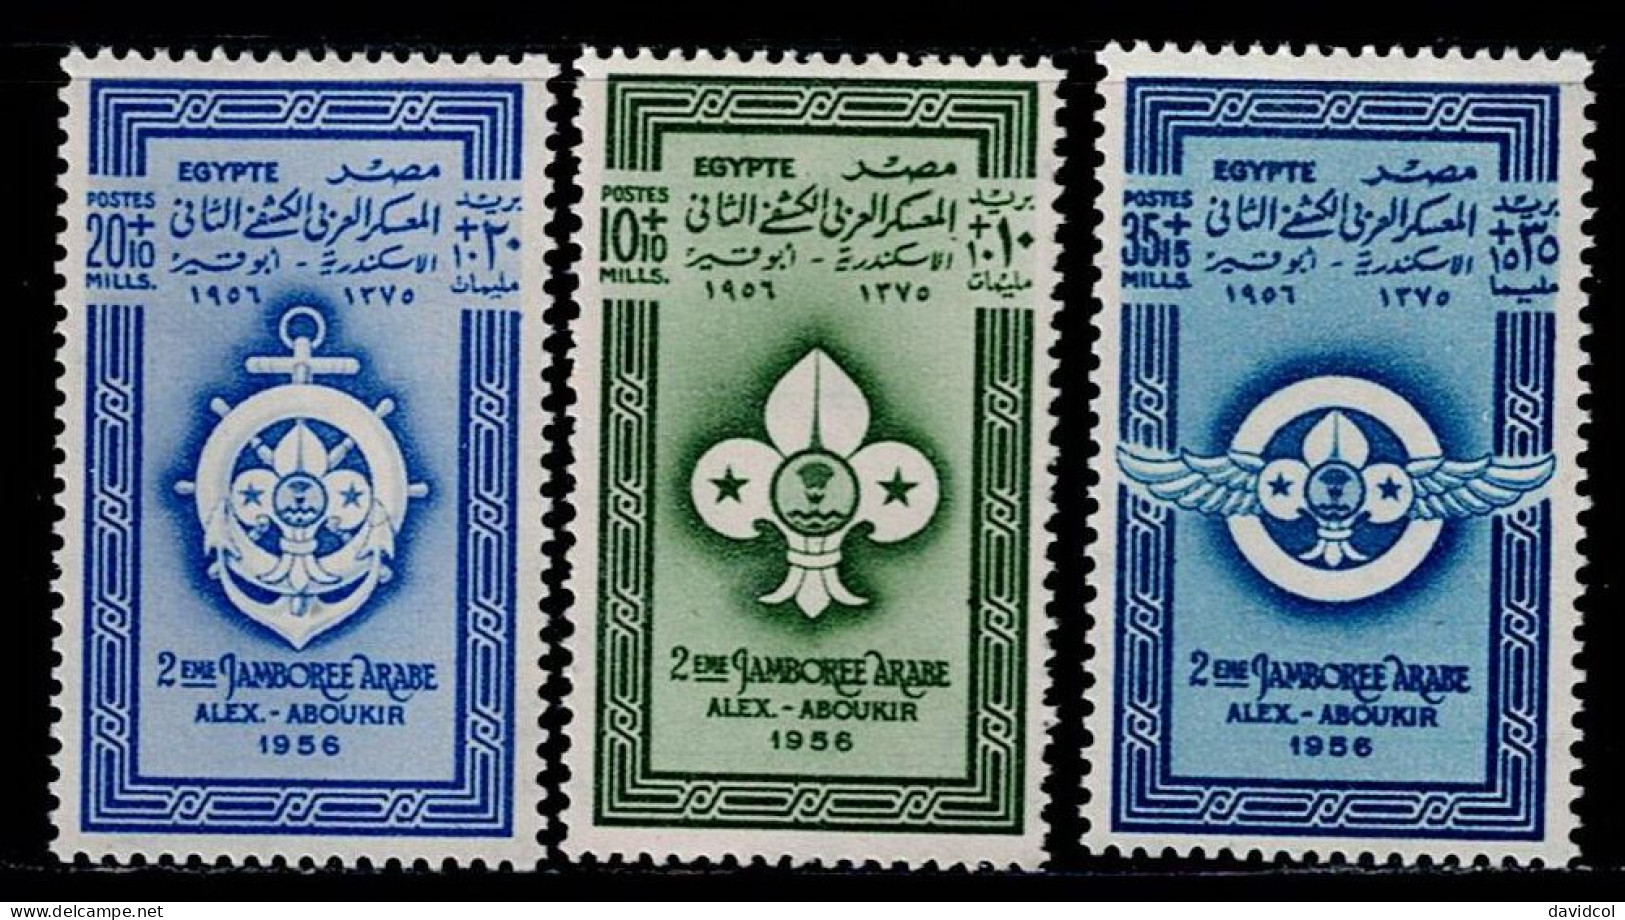 EGI-01- EGYPT - 1956 - MNH -SCOUTS- 2ND ARAB SCOUT JAMBOREE - Unused Stamps